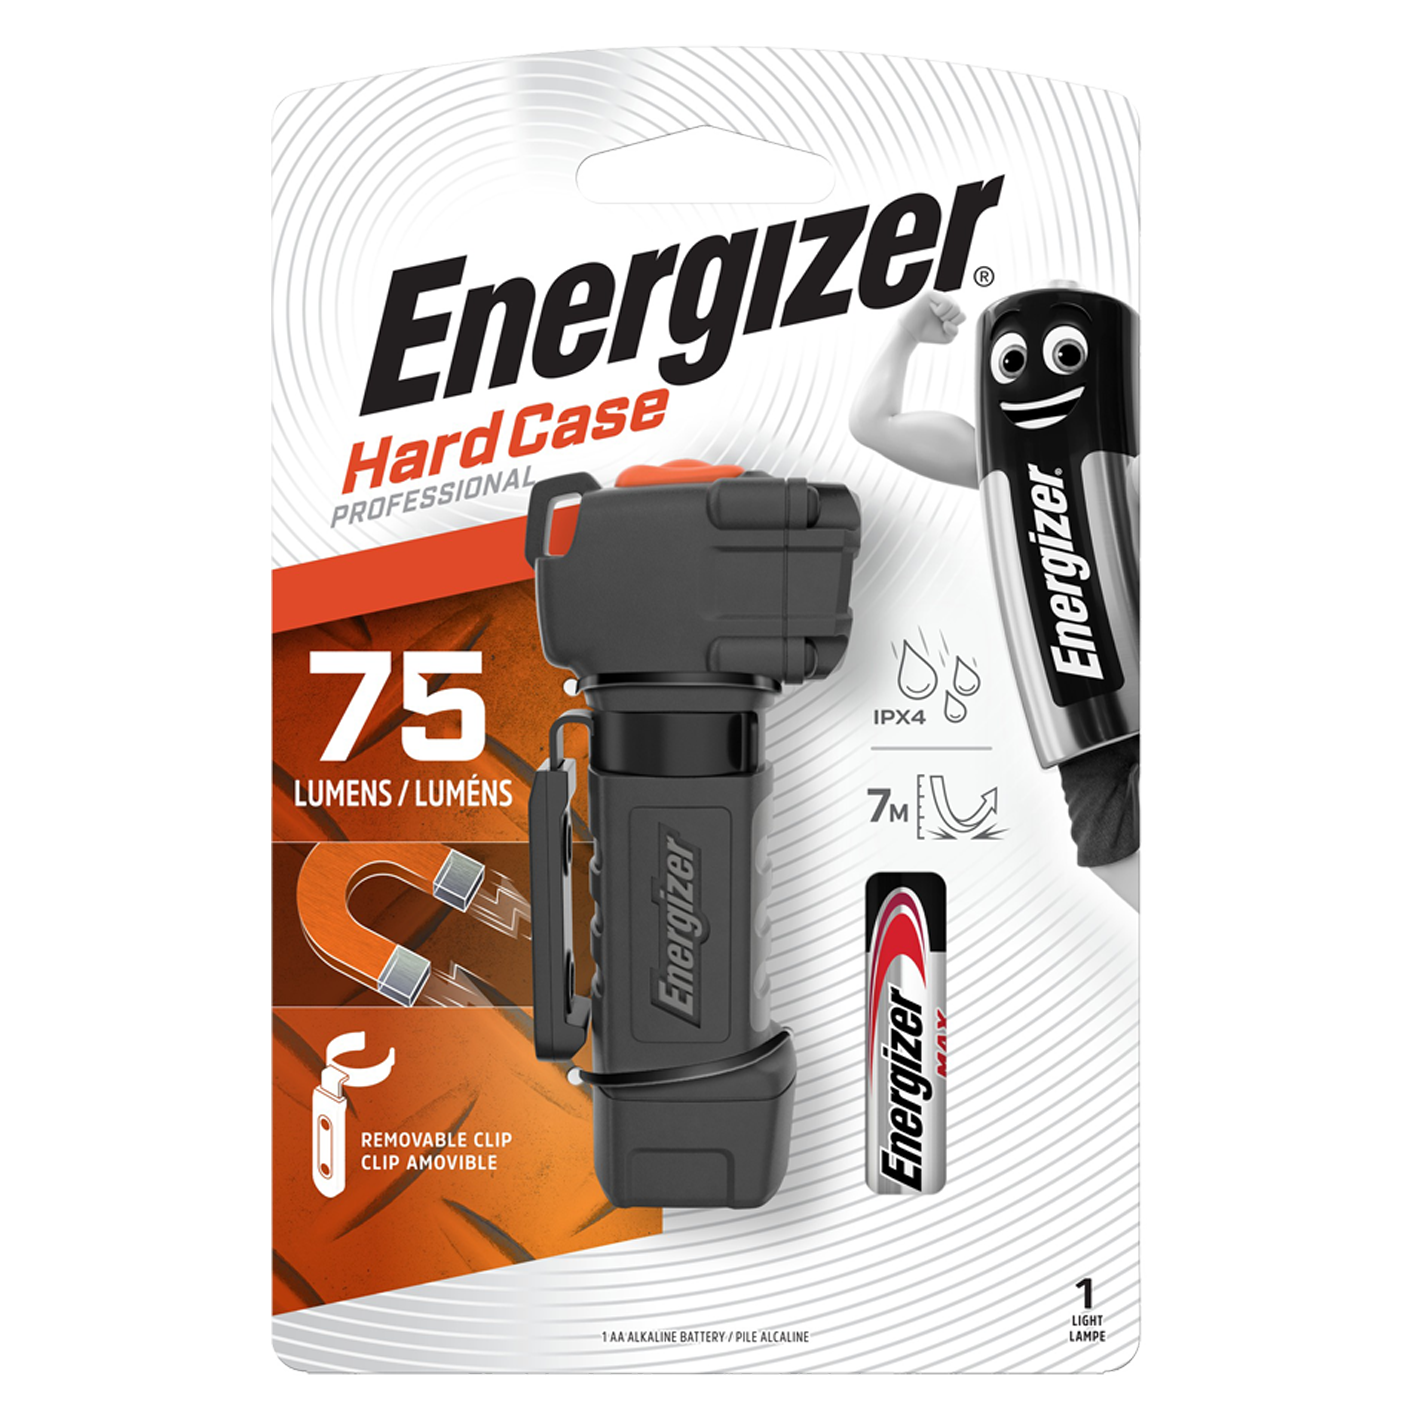 Energizer Hardcase Multiuse Compact Mini Light mit 1 x AA-Batterie